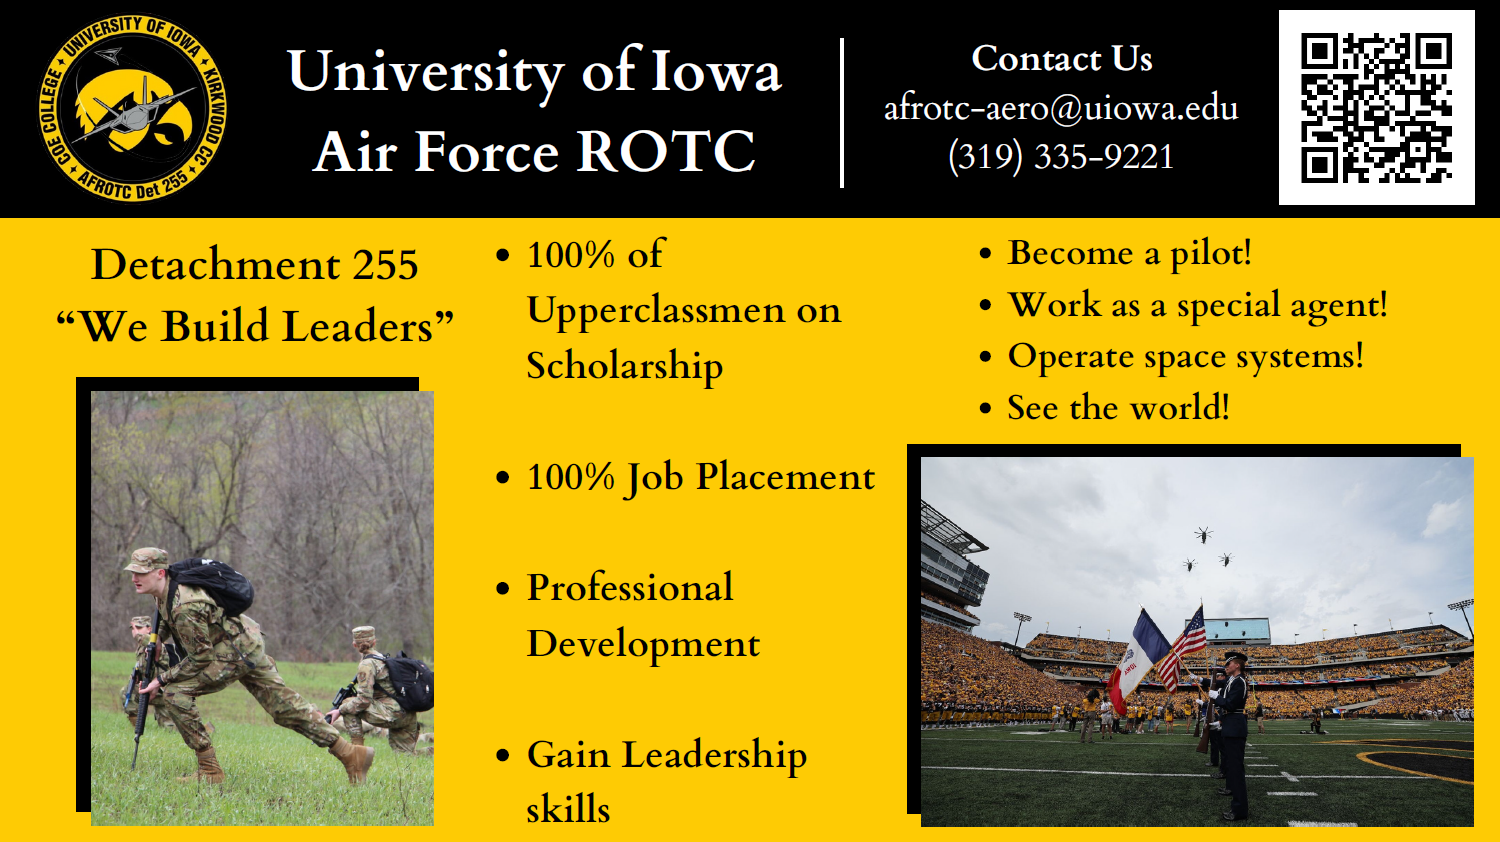 University of Iowa Air Force ROTC program